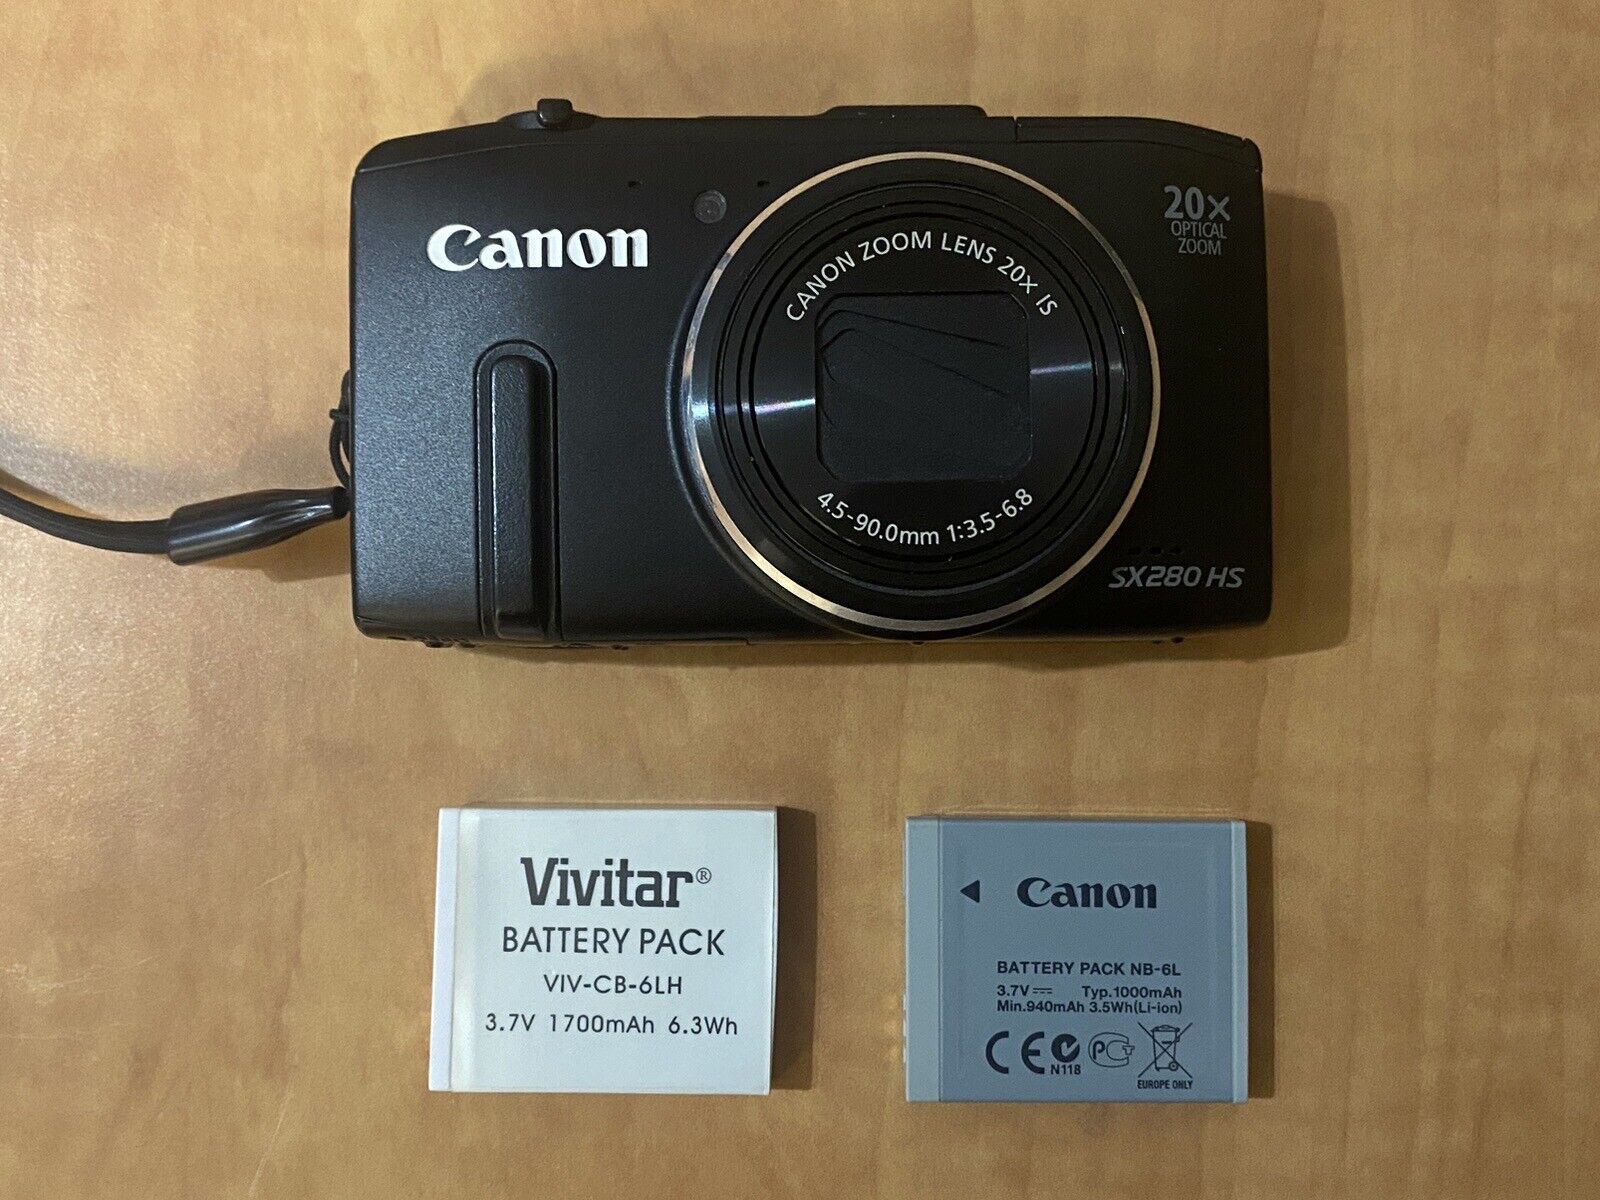 Canon PowerShot SX280 HS 12.1MP Digital Camera - Black for sale